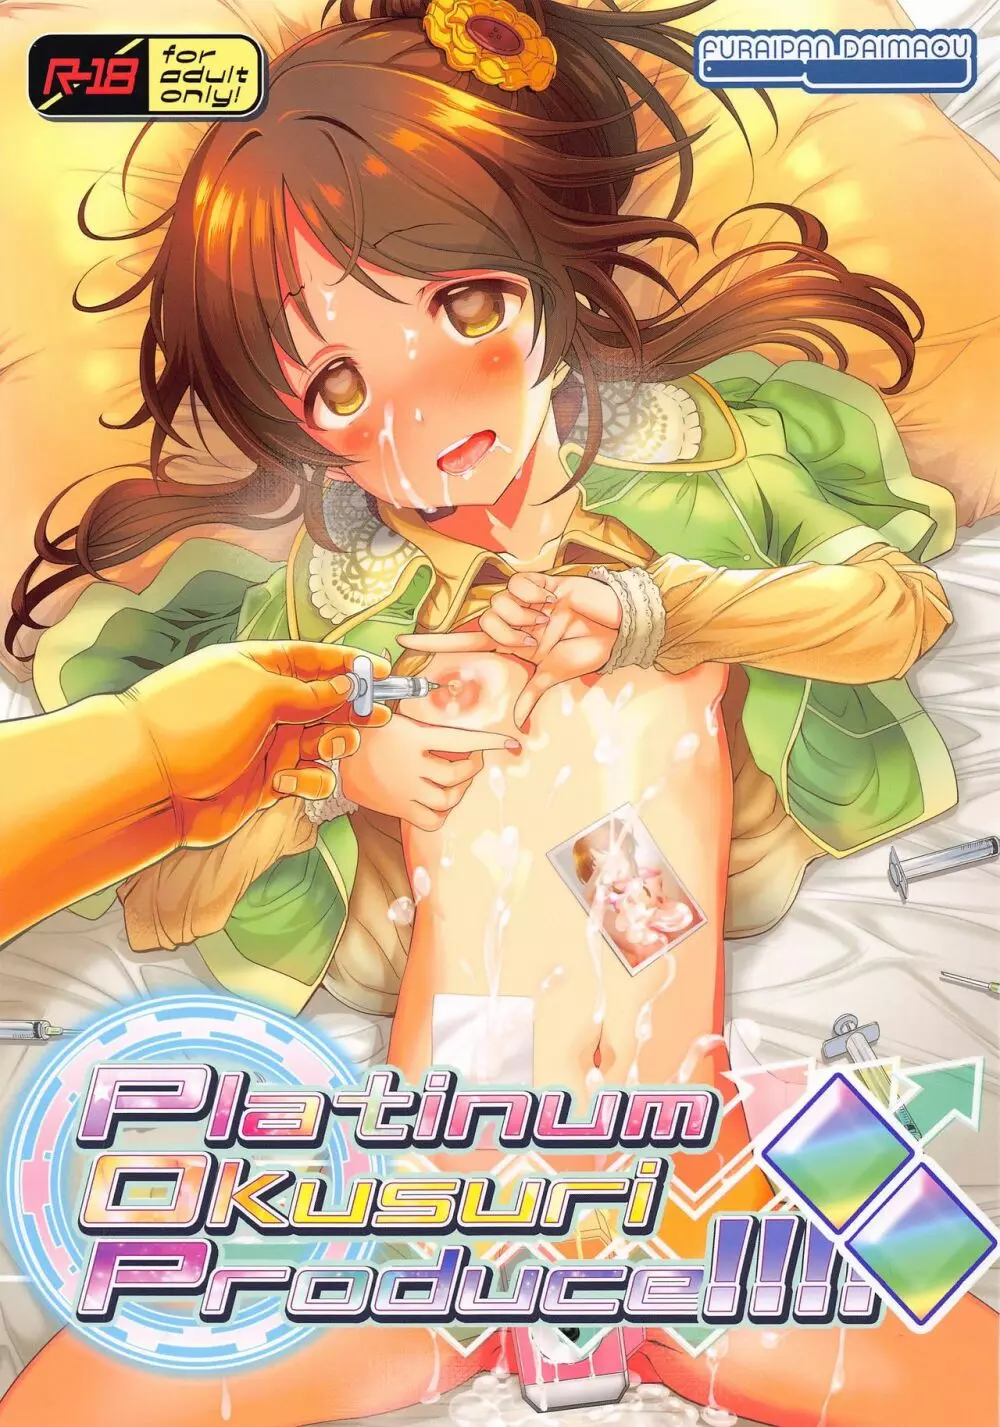 Platinum Okusuri Produce!!!! ◇◇ - page1